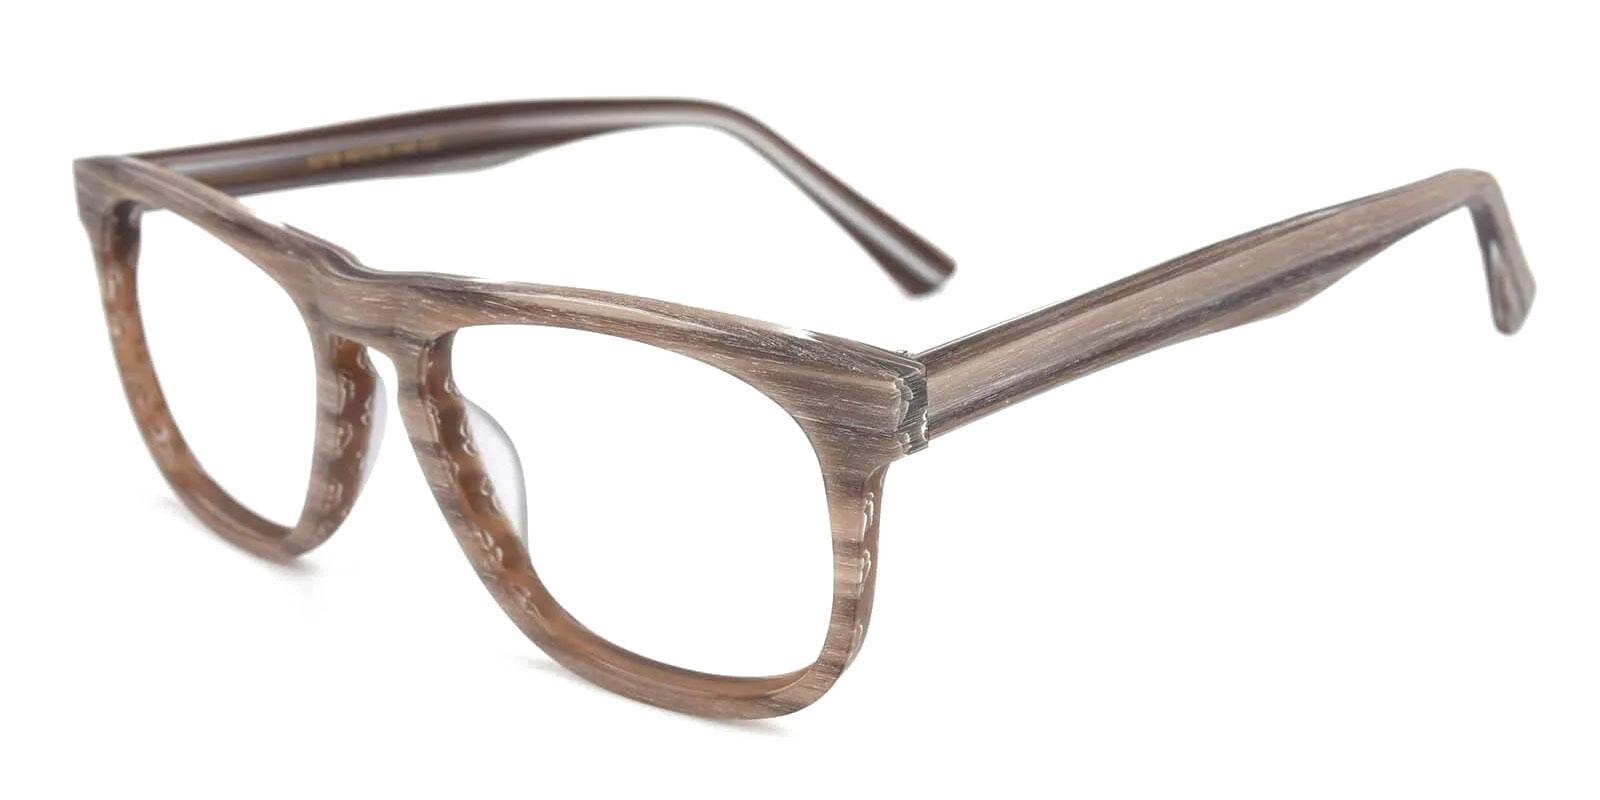 Readsboro Brown Acetate Eyeglasses , UniversalBridgeFit Frames from ABBE Glasses